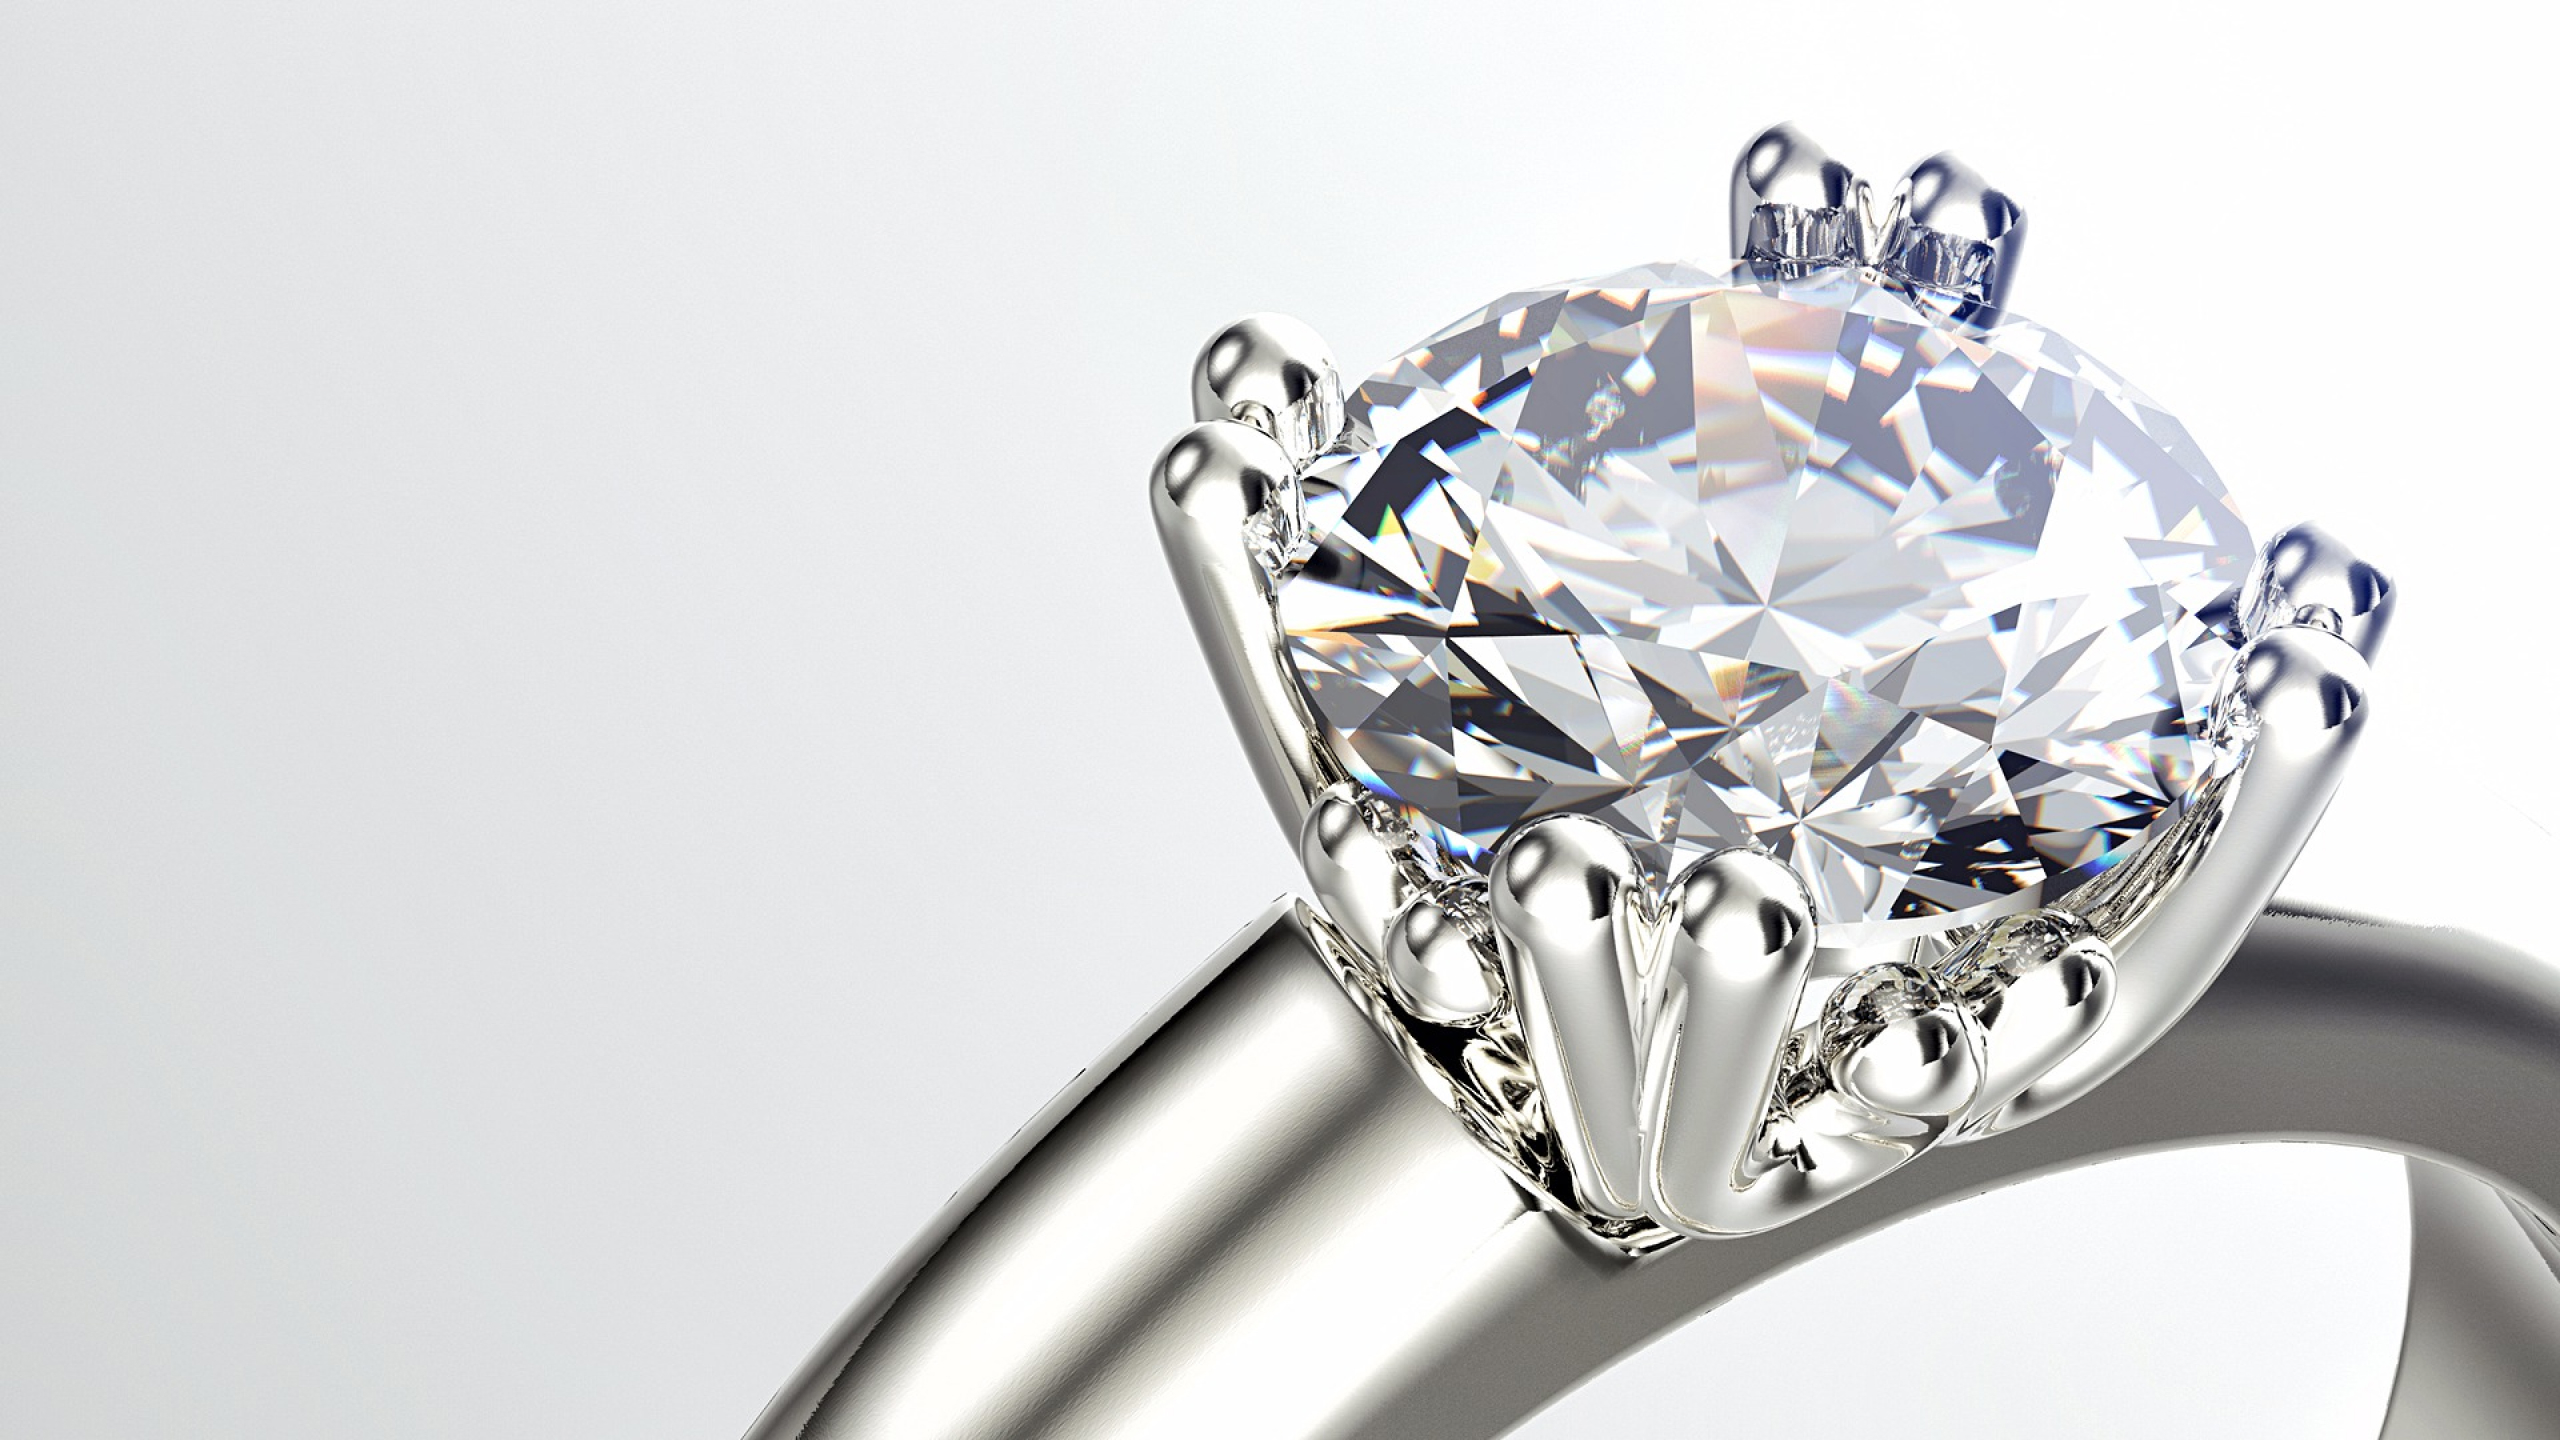 Ювелирные изделия first class diamonds. Даймонд джевелери. Диамонд кольцо с бриллиантами.